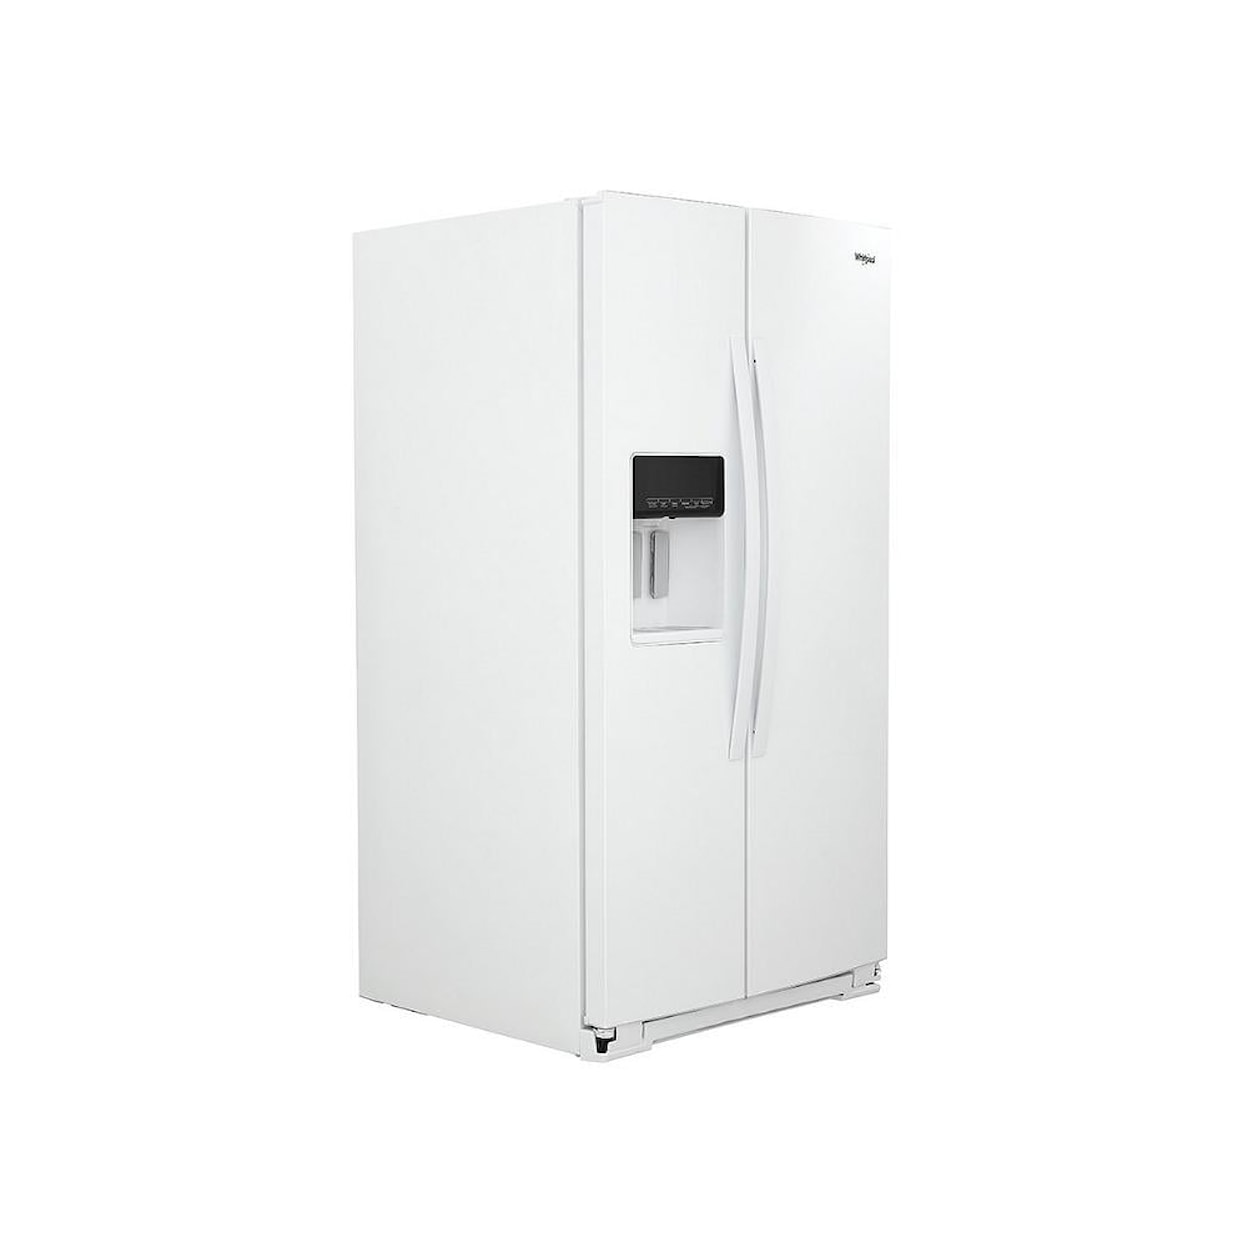 Whirlpool Refrigerators Side By Side Freestanding Refrigerator